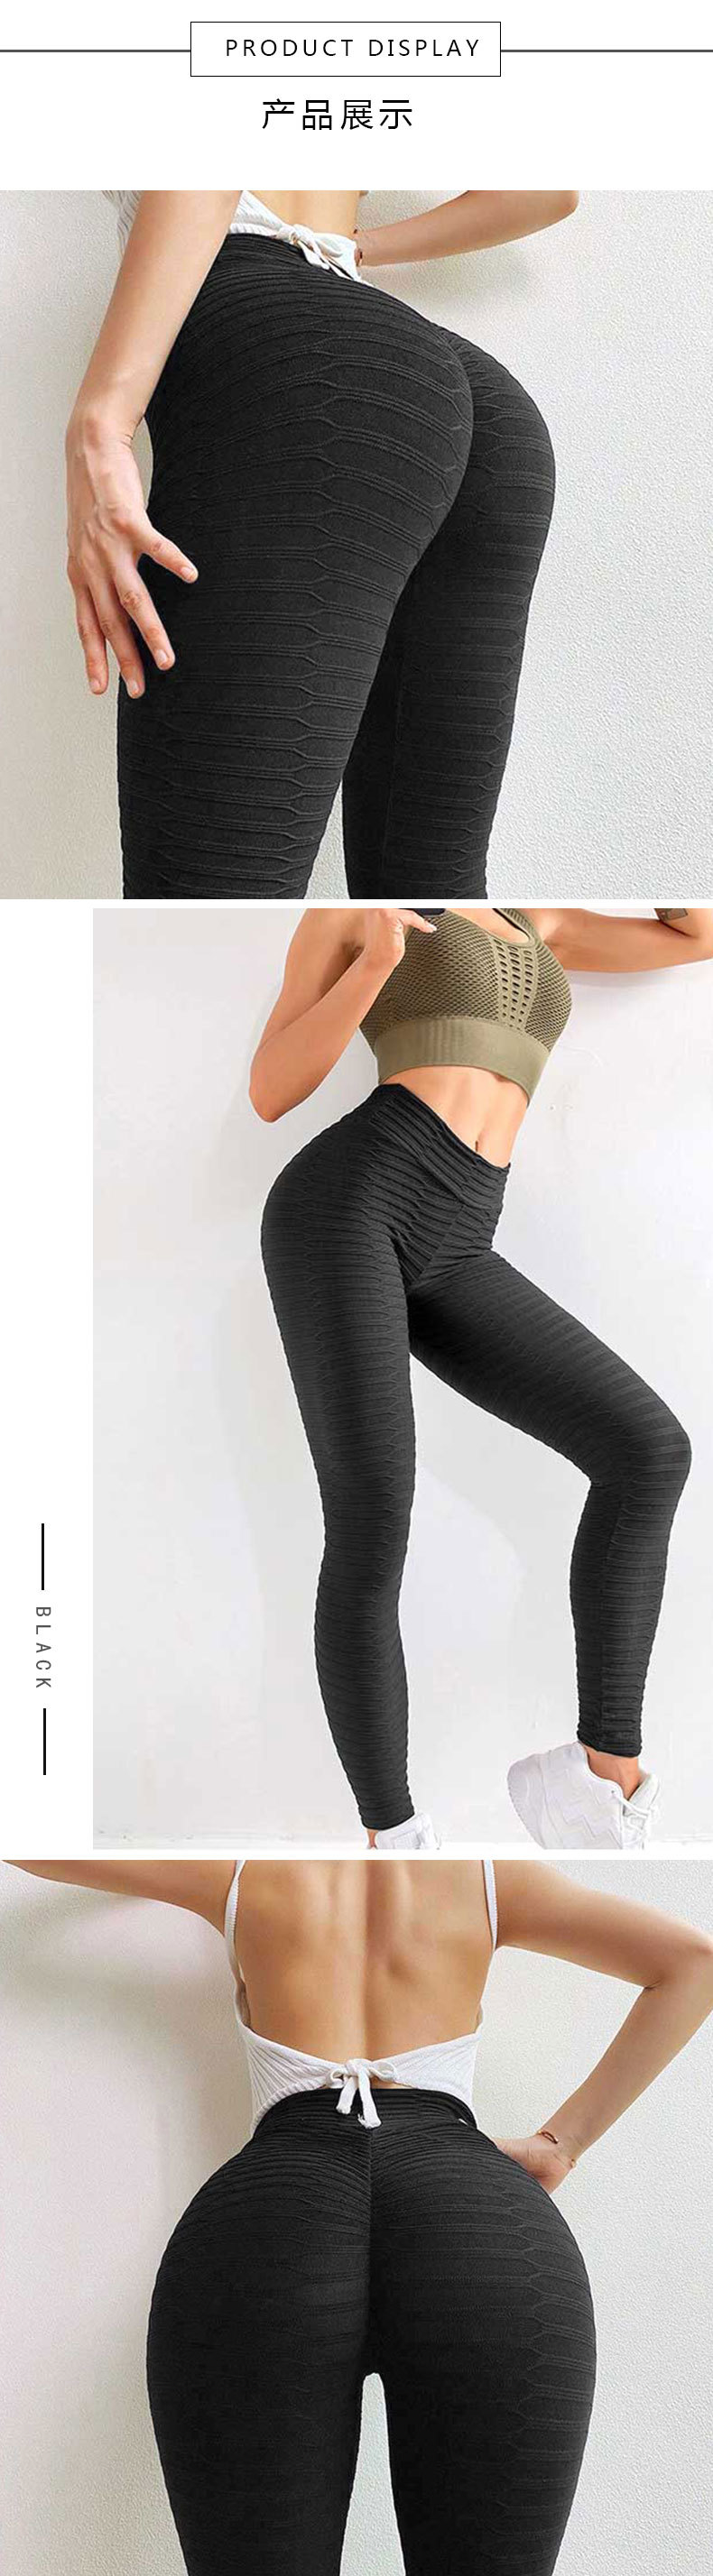 Popular high waist hip lifting sports fitness Leggings jacquard tight Yoga Pants women